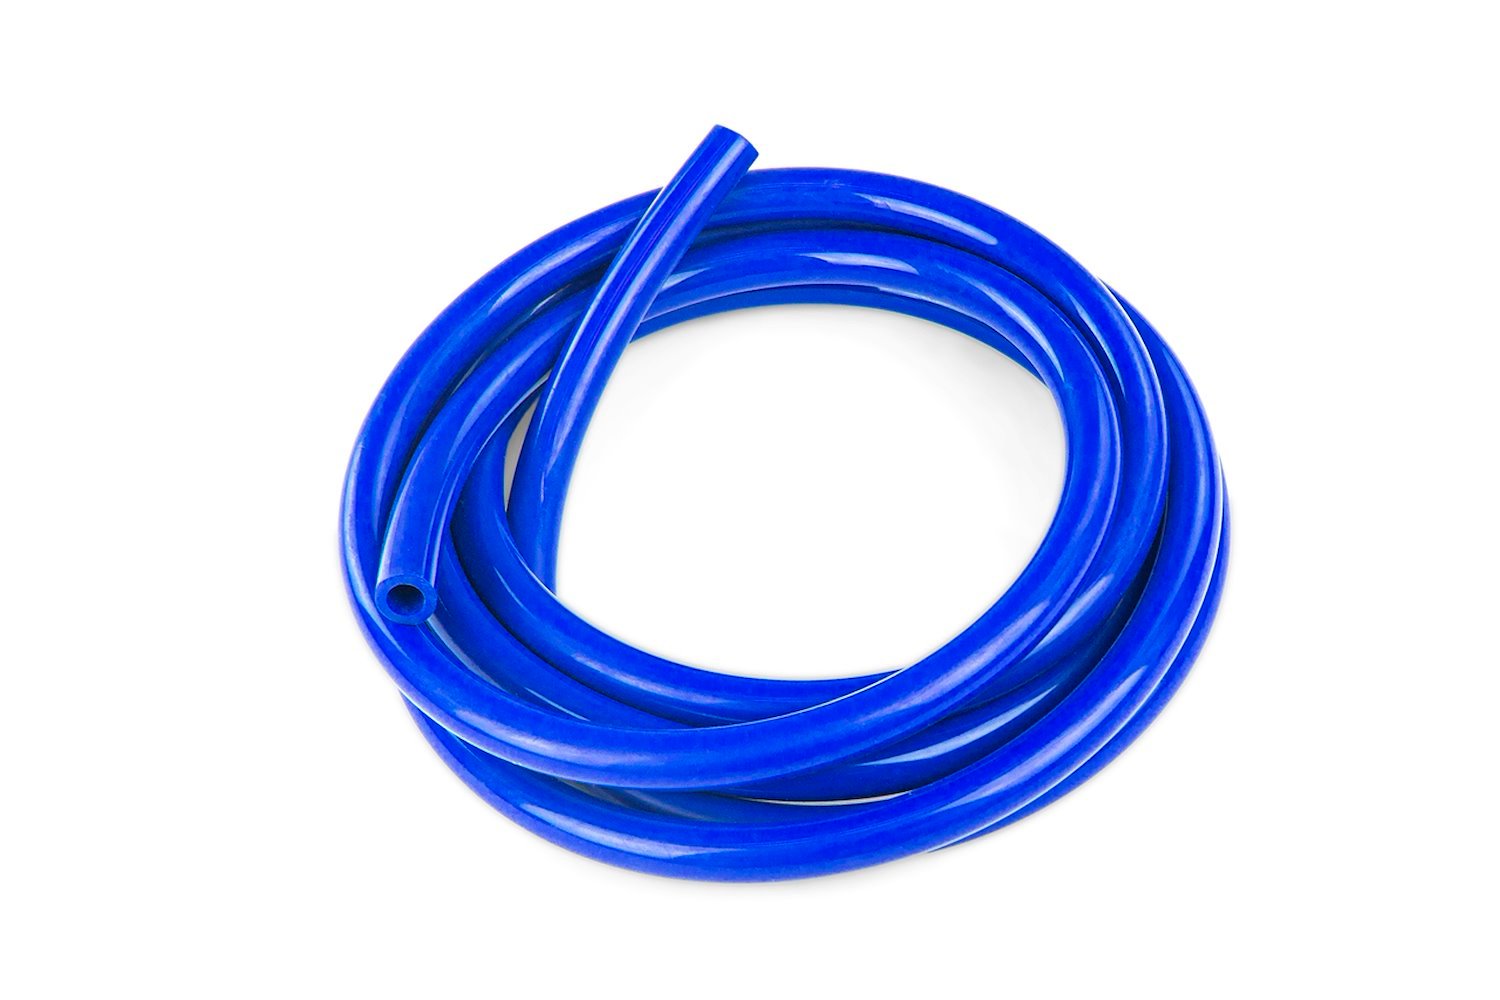 HTSVH4-BLUEx5 High-Temperature Silicone Vacuum Hose Tubing, 5/32 in. ID, 5 ft. Roll, Blue